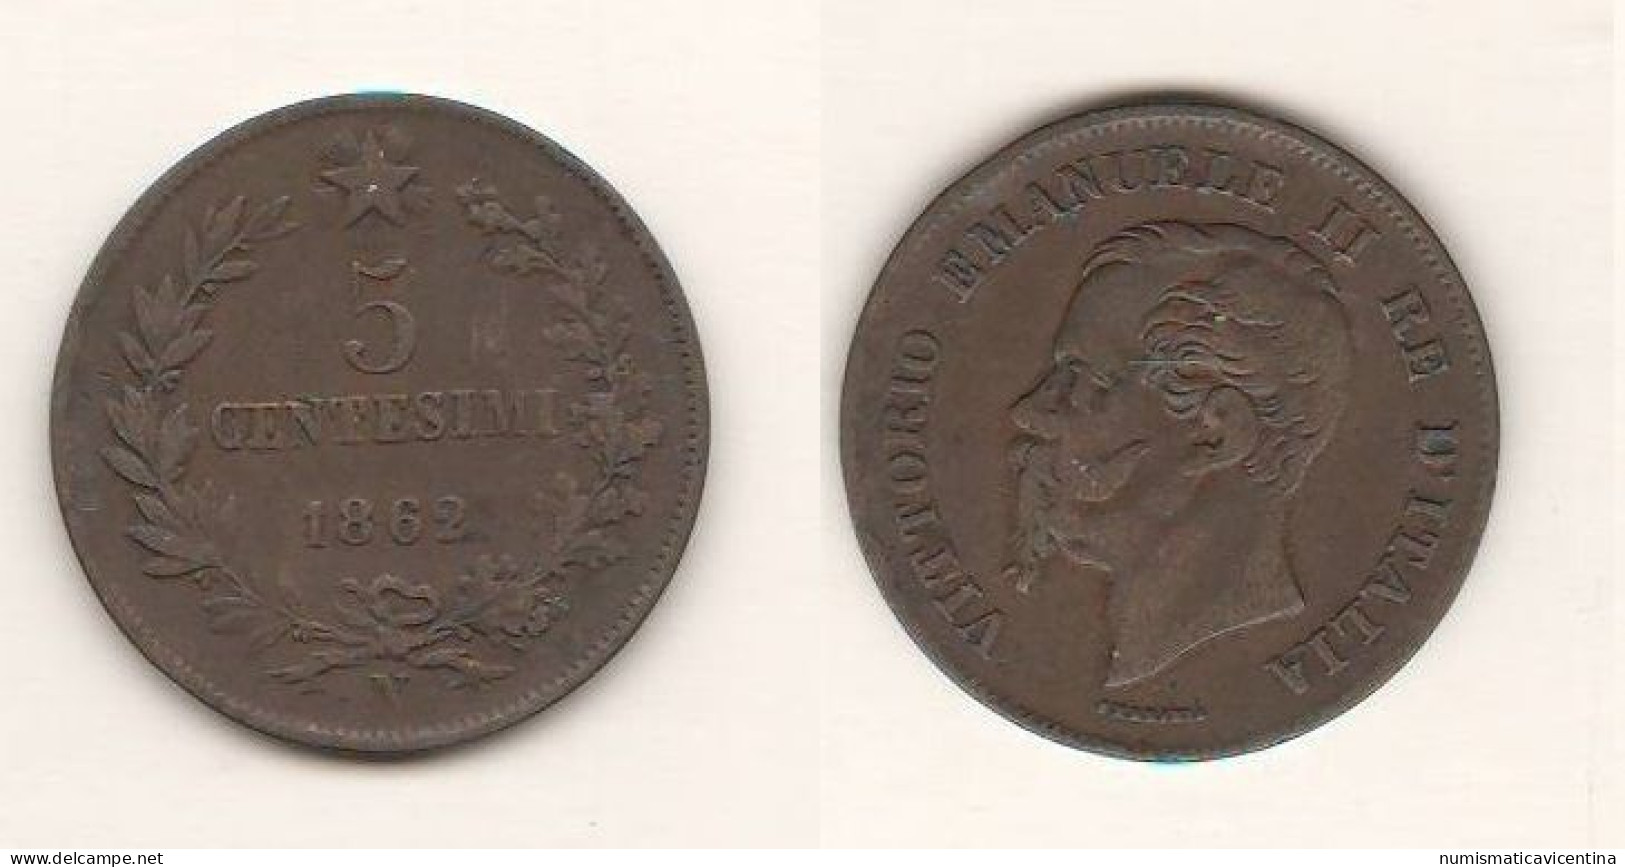 Italie 5 Centesimi Cents 1862 Italy Italia Regno Naples Mint Copper Coin - 1861-1878 : Víctor Emmanuel II